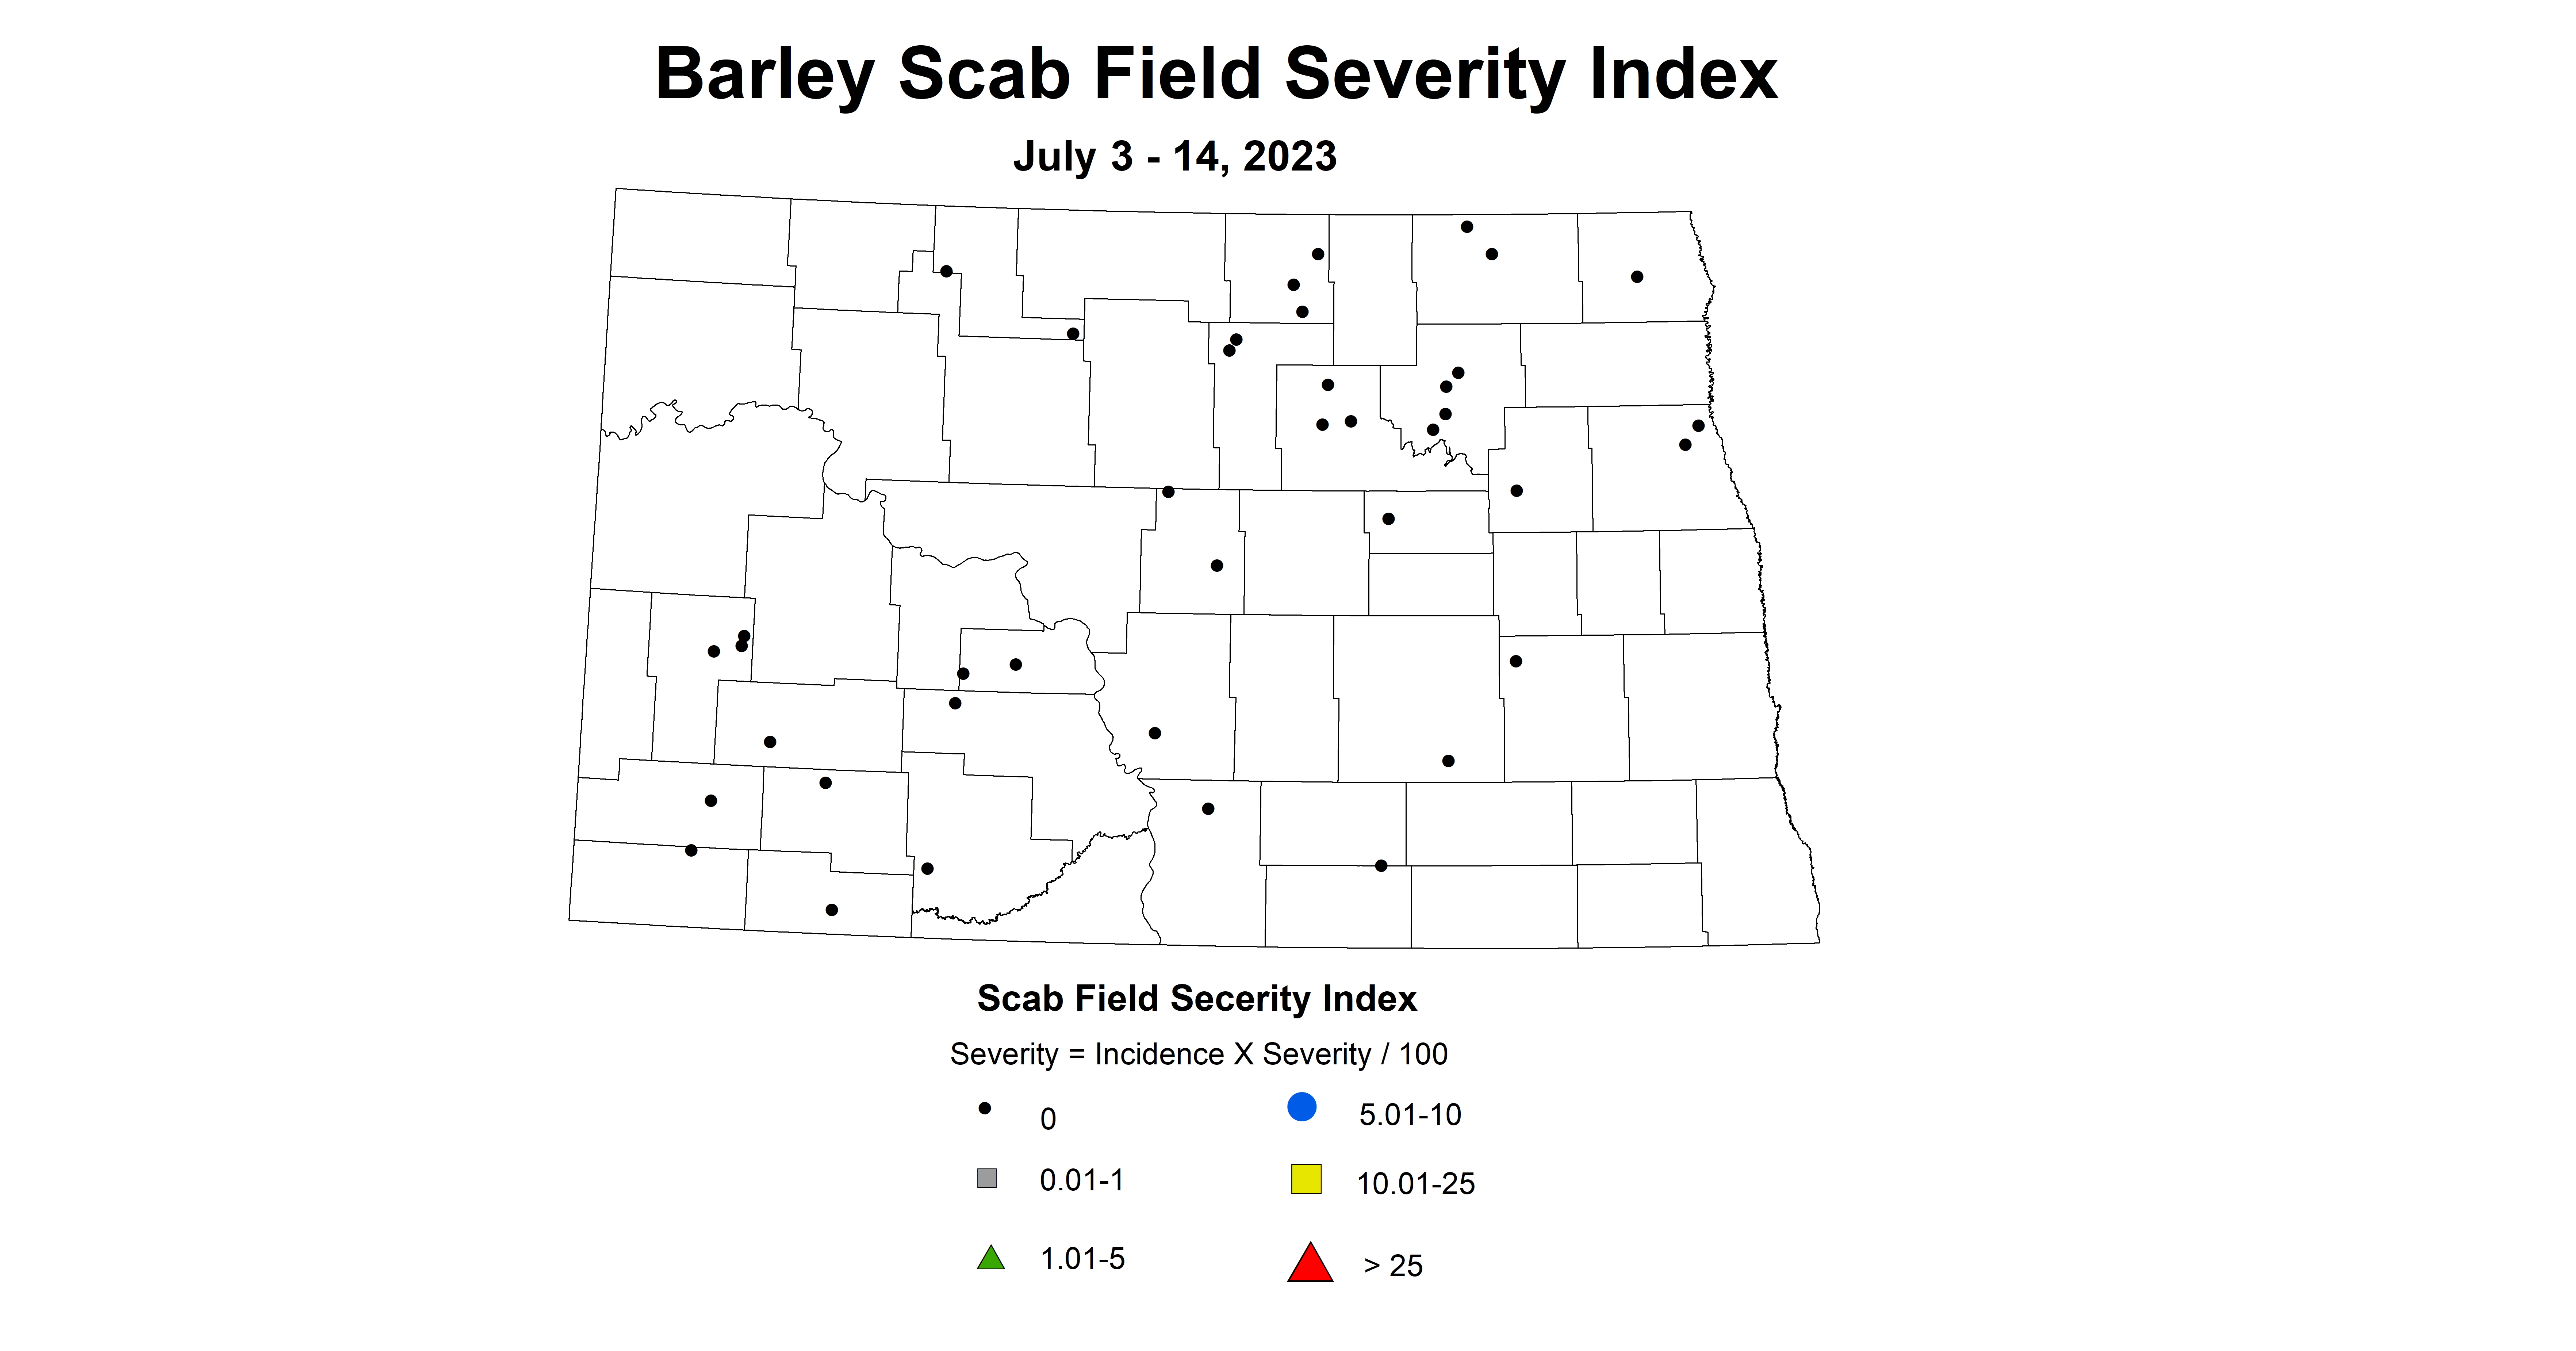 barley scab field severity index July 3-14 2023